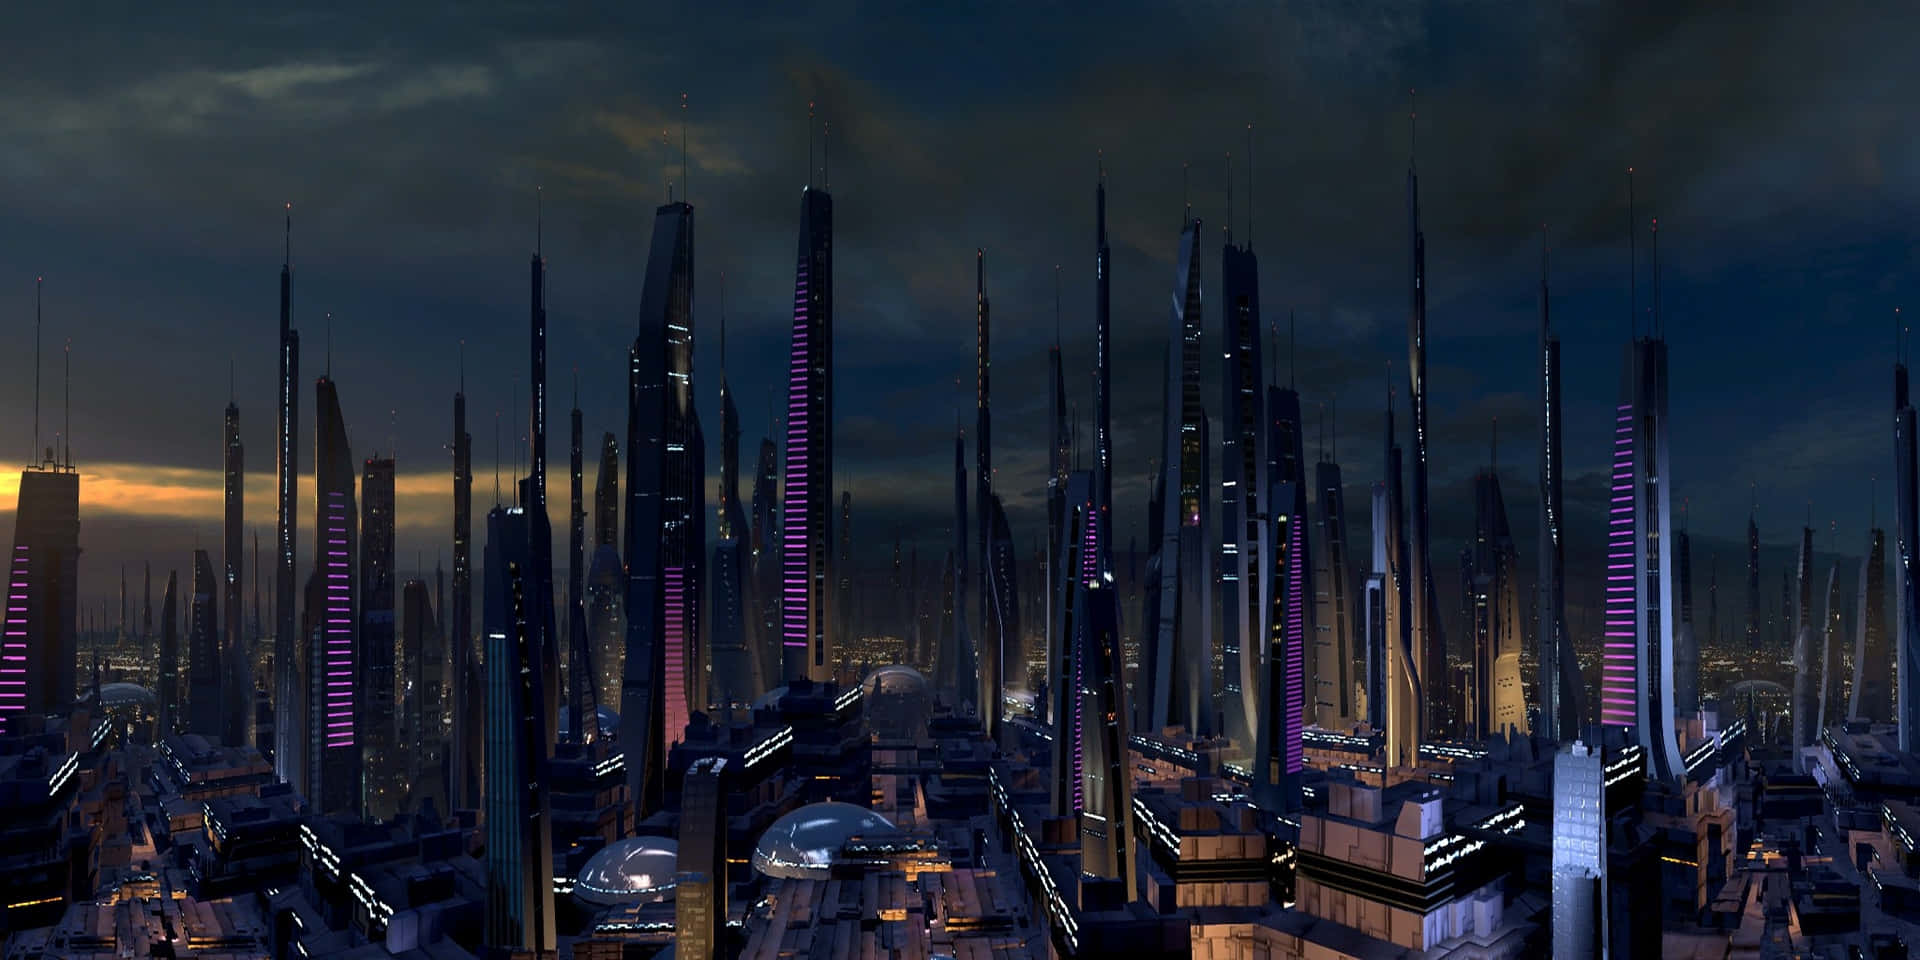 Impresionantevista De La Ciudadela De Mass Effect Fondo de pantalla